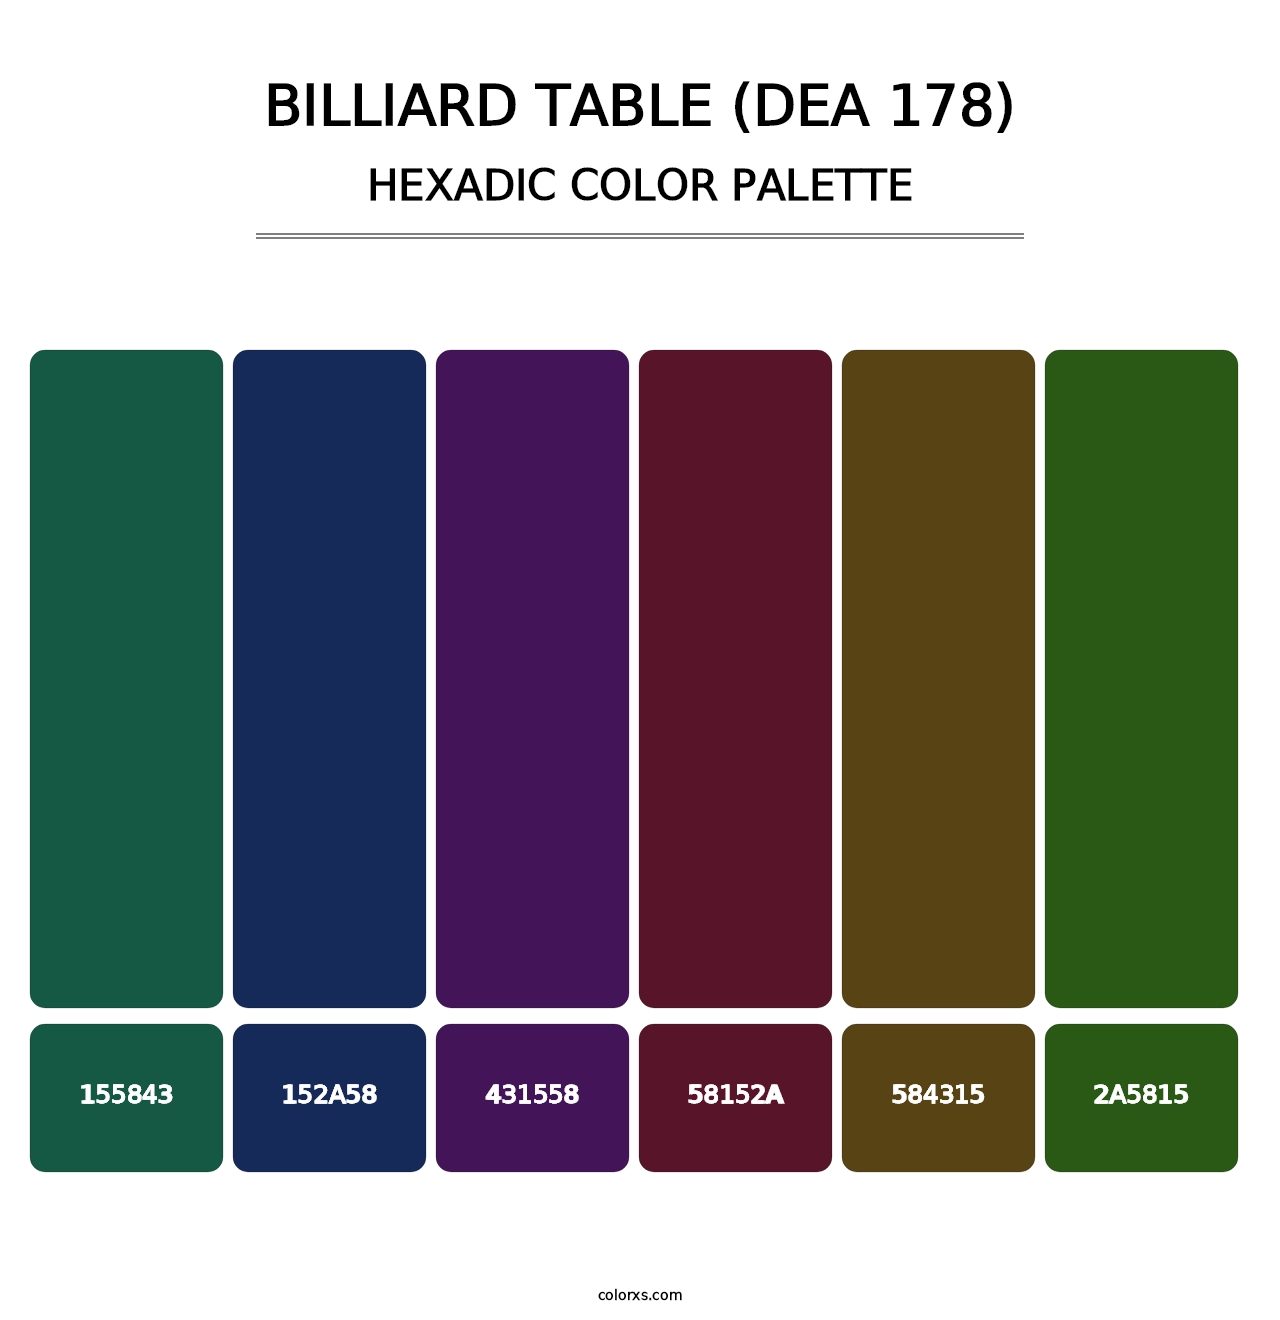 Billiard Table (DEA 178) - Hexadic Color Palette